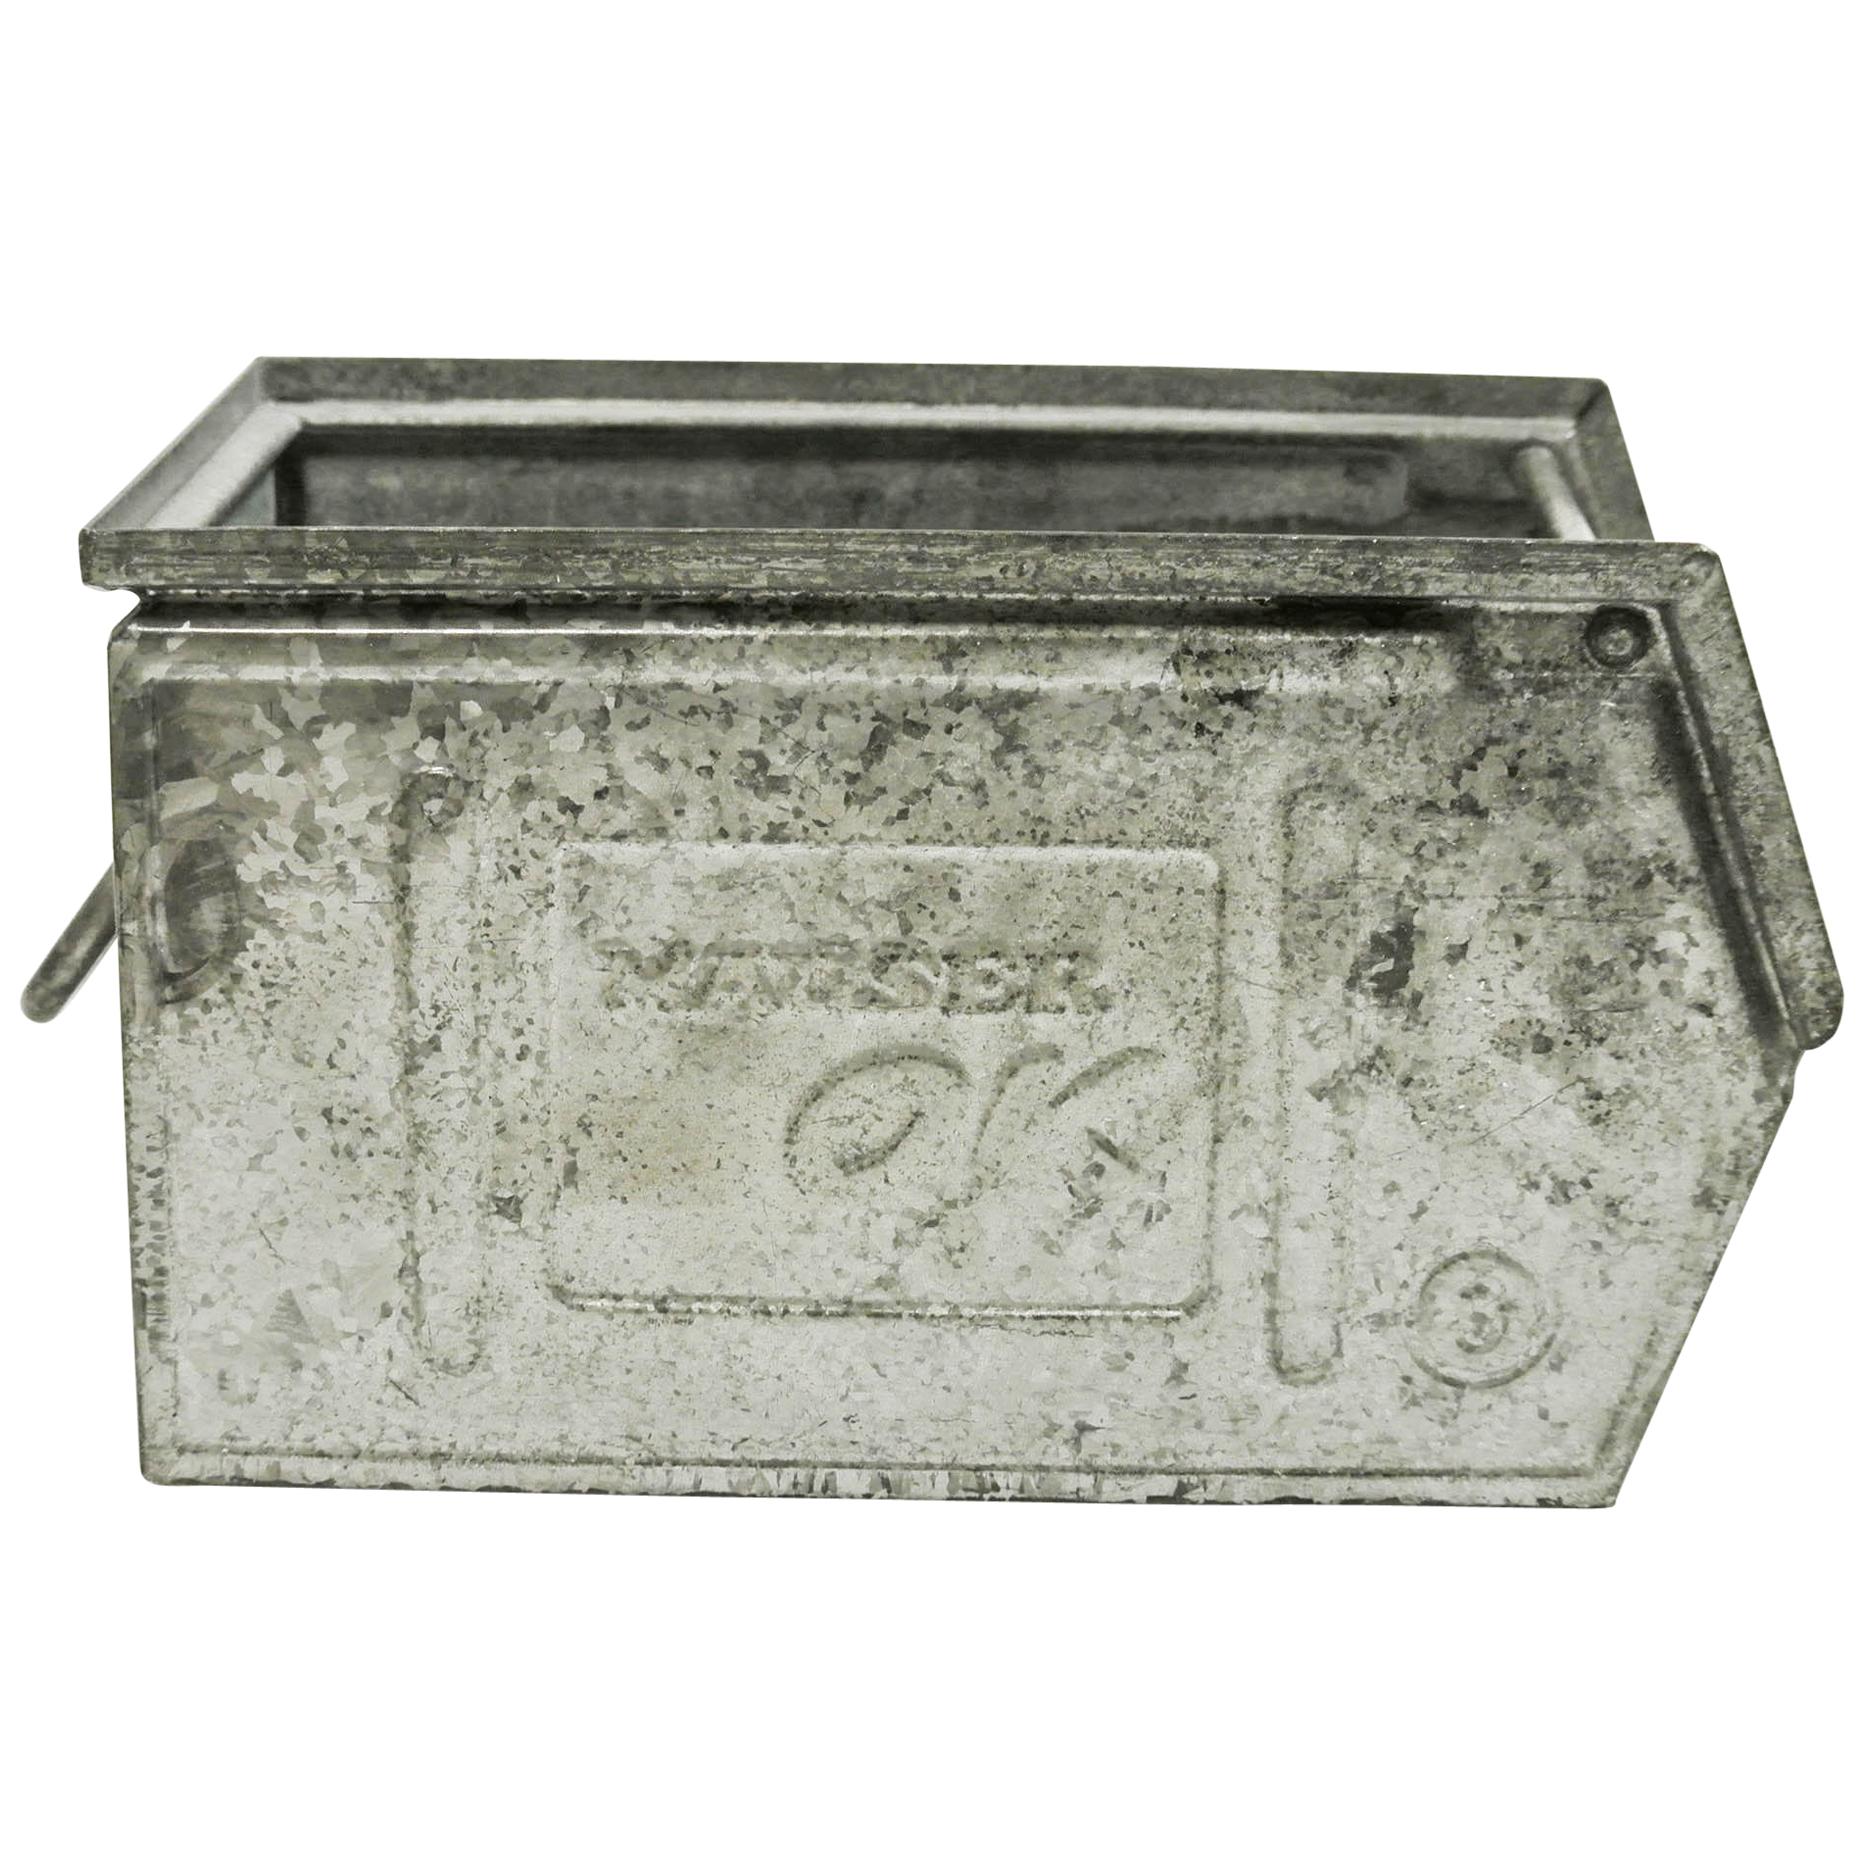 Small Galvanized Metallic Crates ‘Varnished’, France, circa 1950